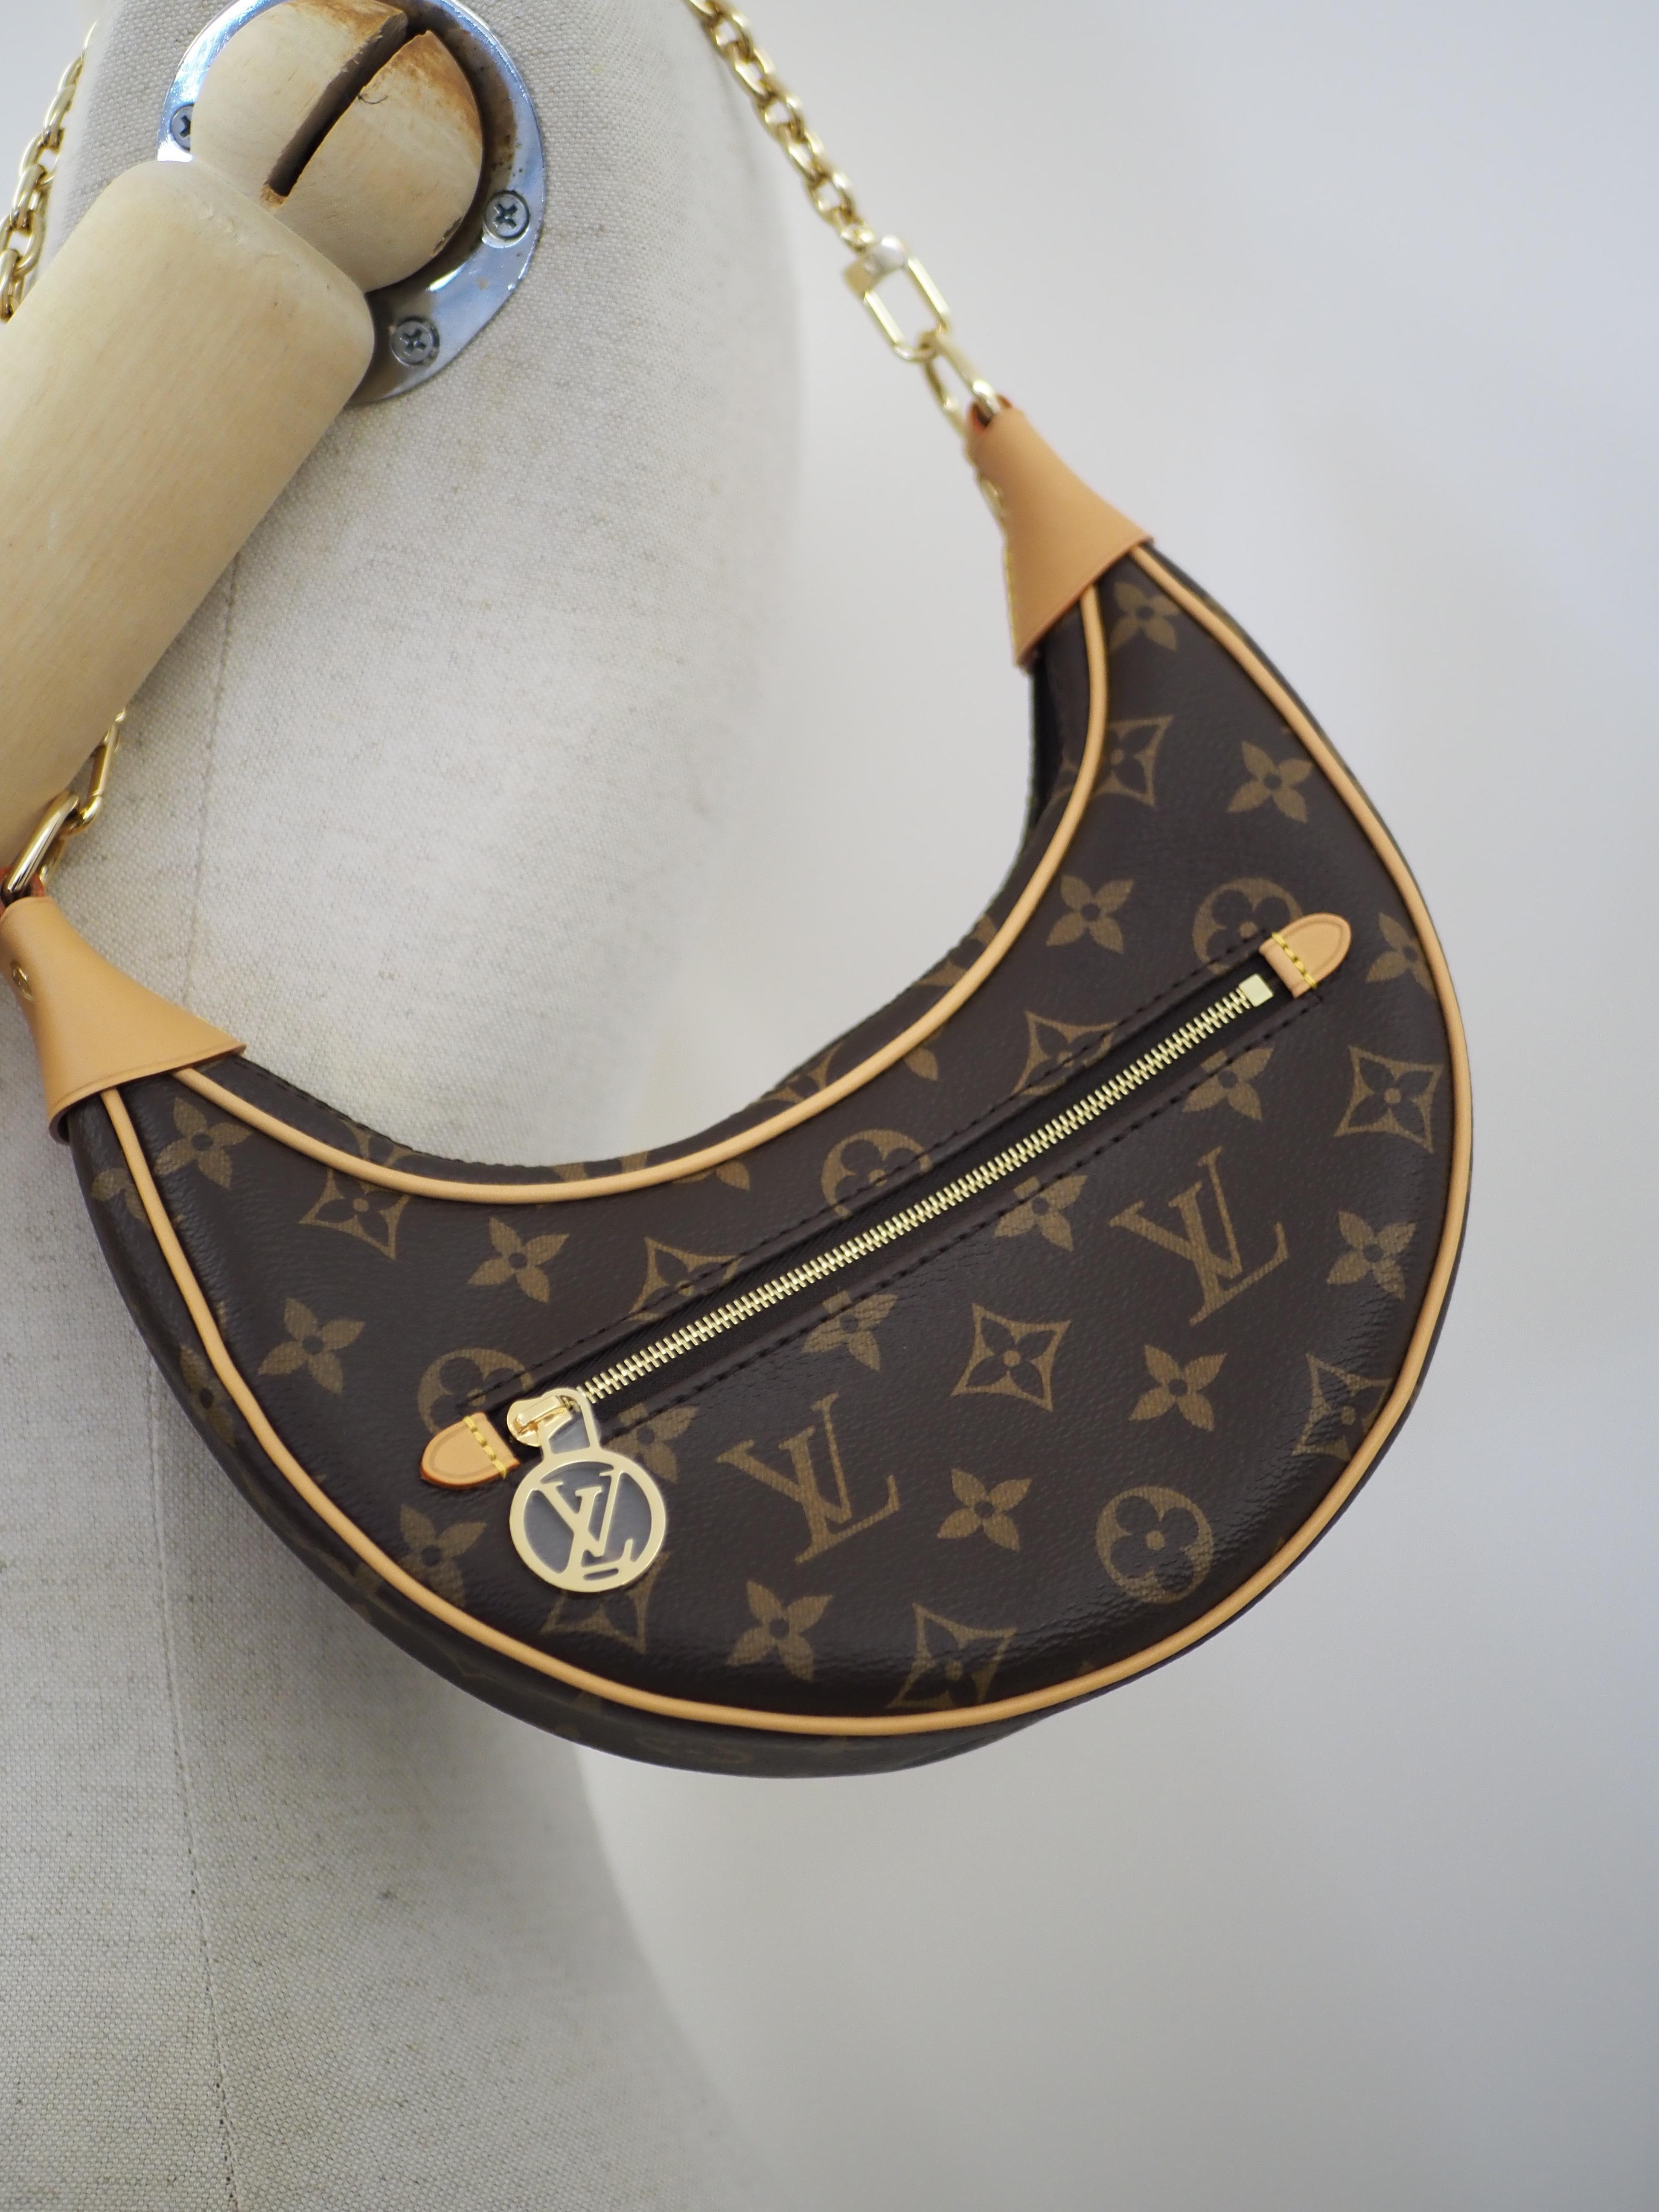 Women's or Men's Louis Vuitton Loop baguette handbag shoulder bag NWOT